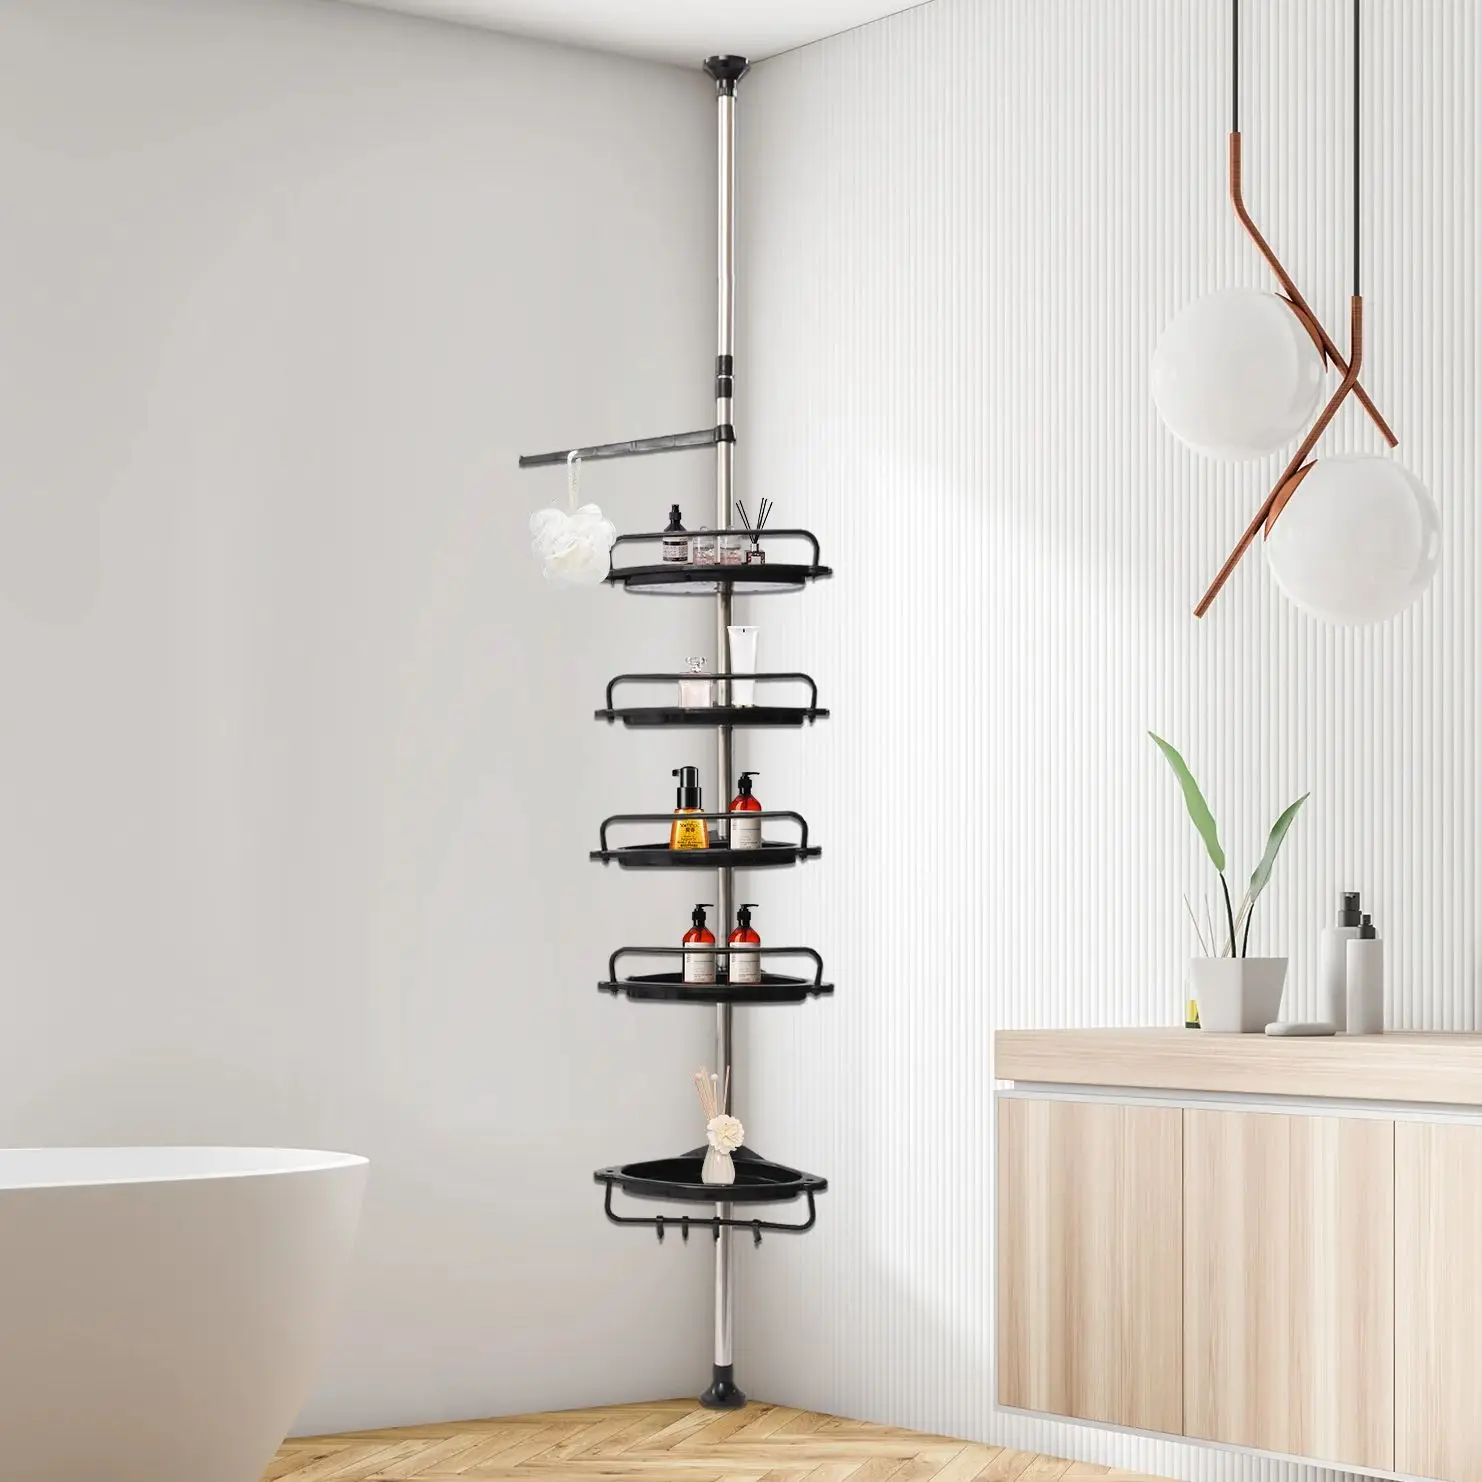 

Rustproof Shower Corner for Bathroom Bathtub Storage Organizer For Shampoo Accessories 5-Tier Adjustable Shelves with Tension